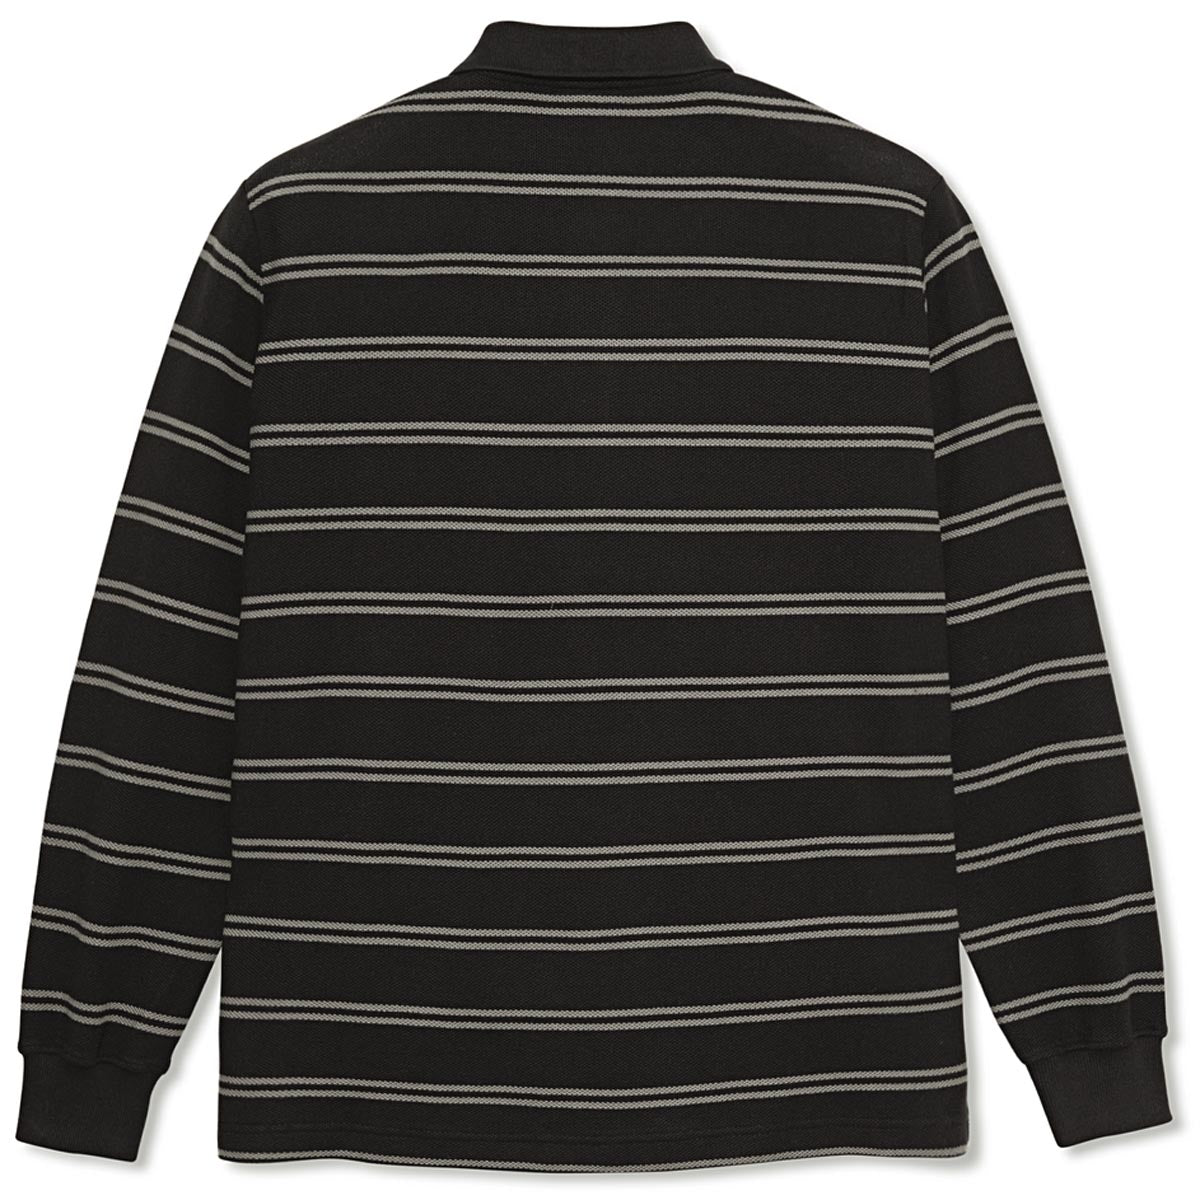 Polar Polo Stripe Long Sleeve Shirt - Black image 2